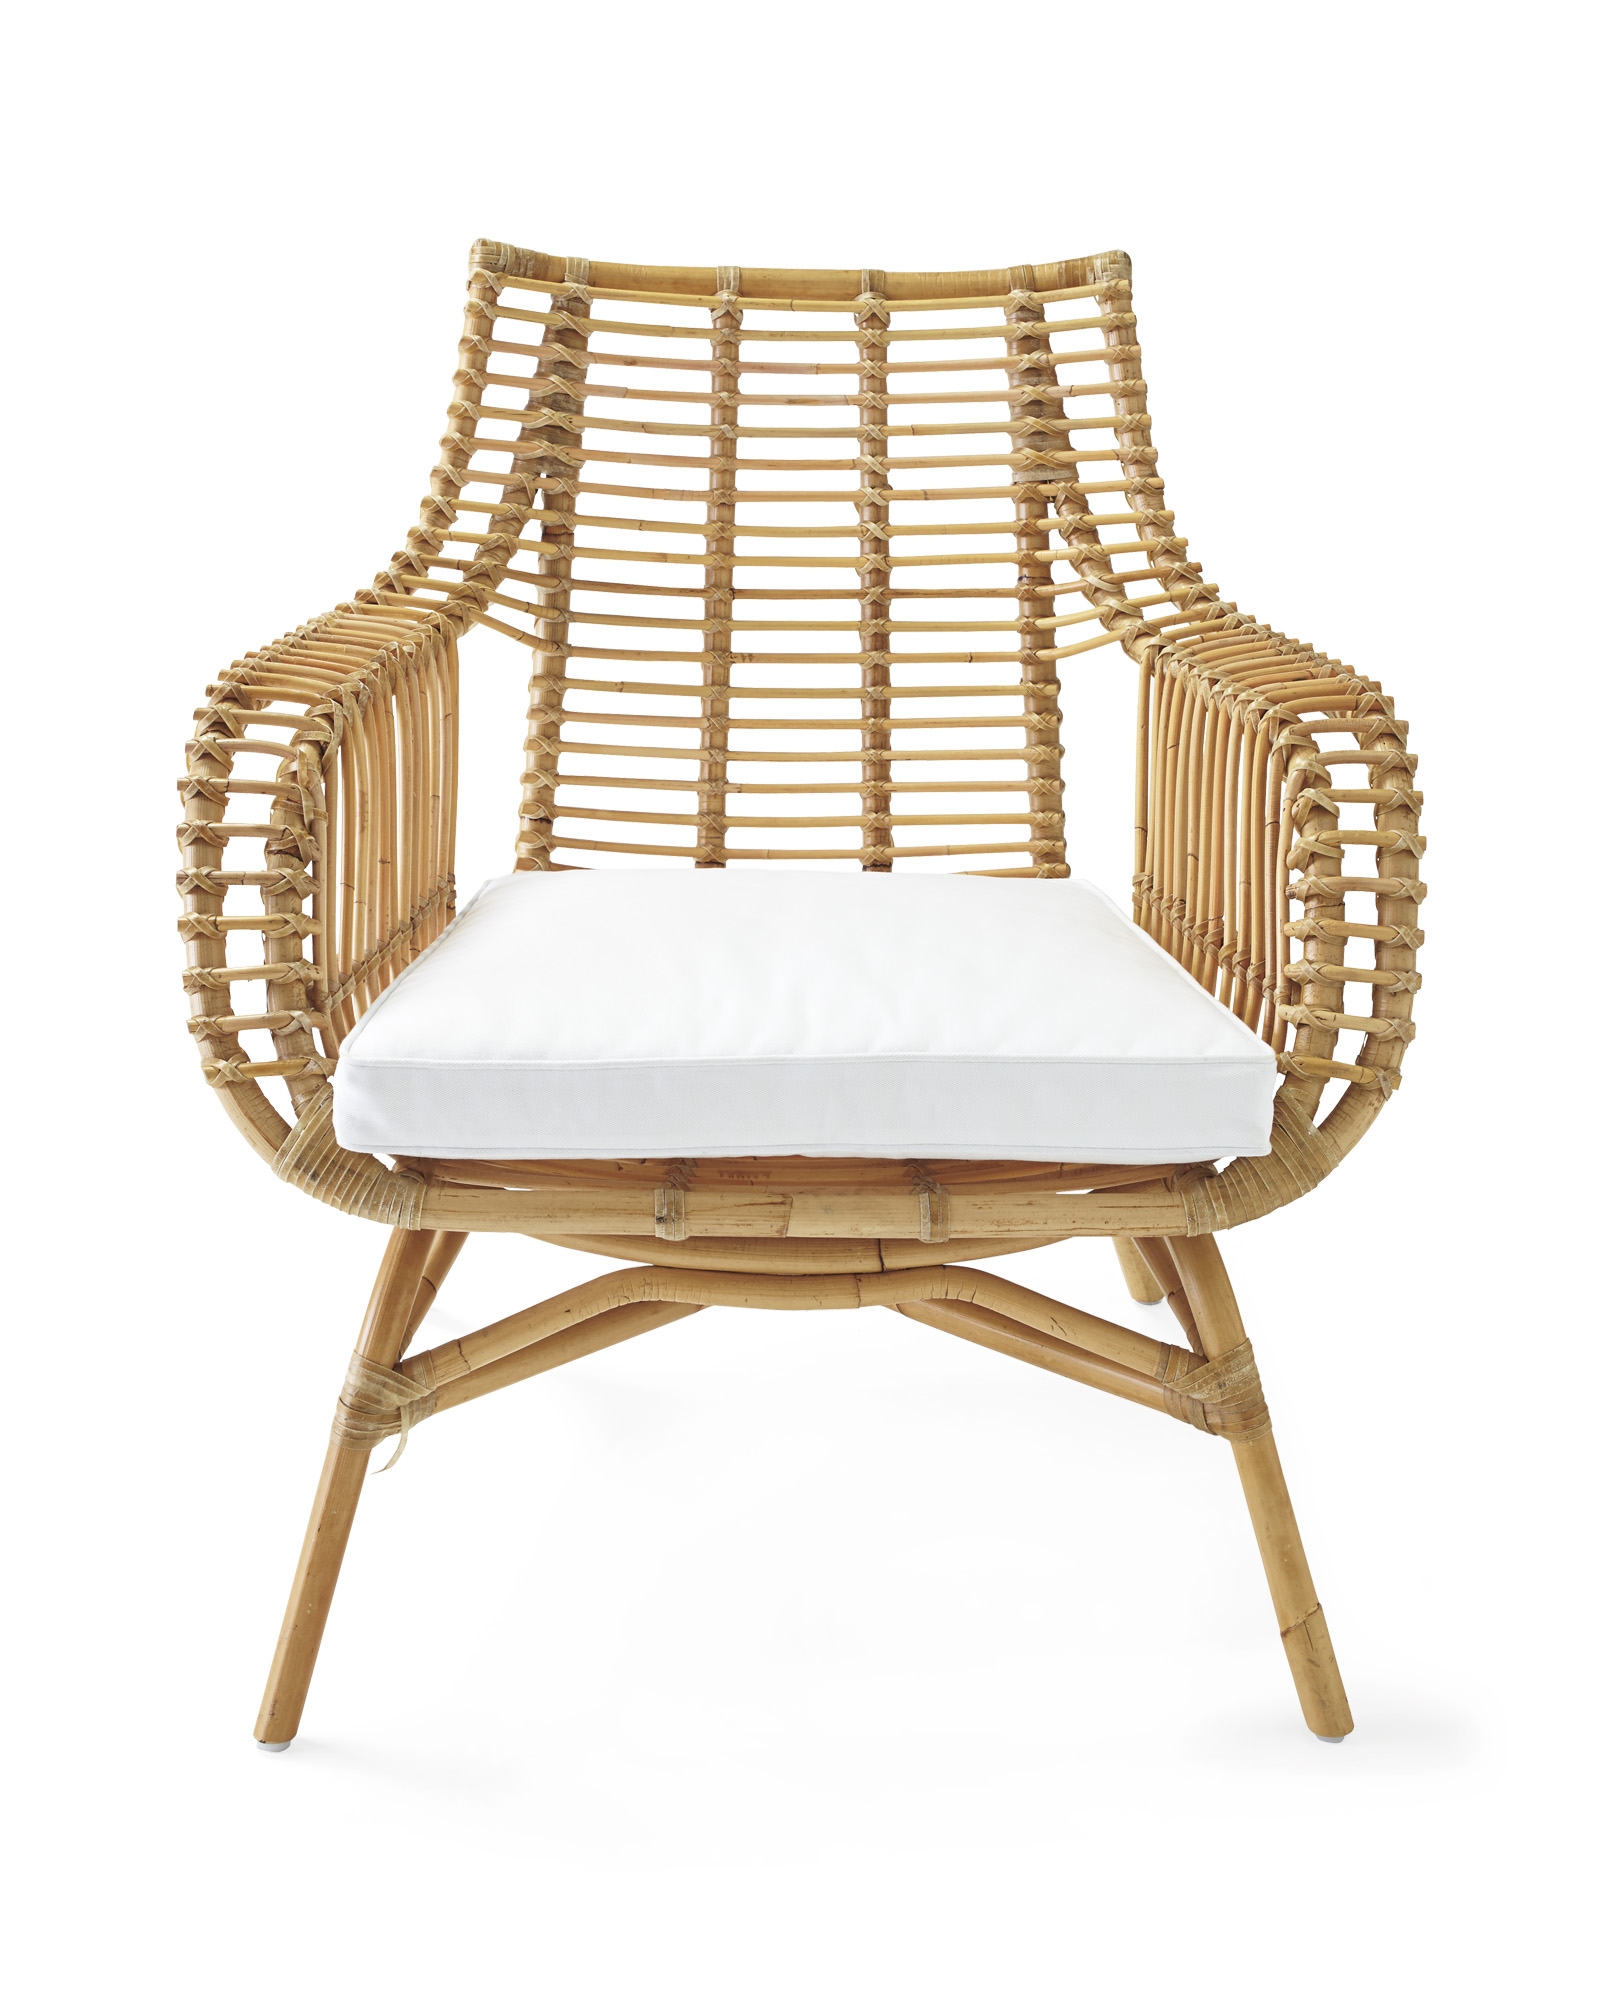 Venice Rattan Chair Cushion - Image 1